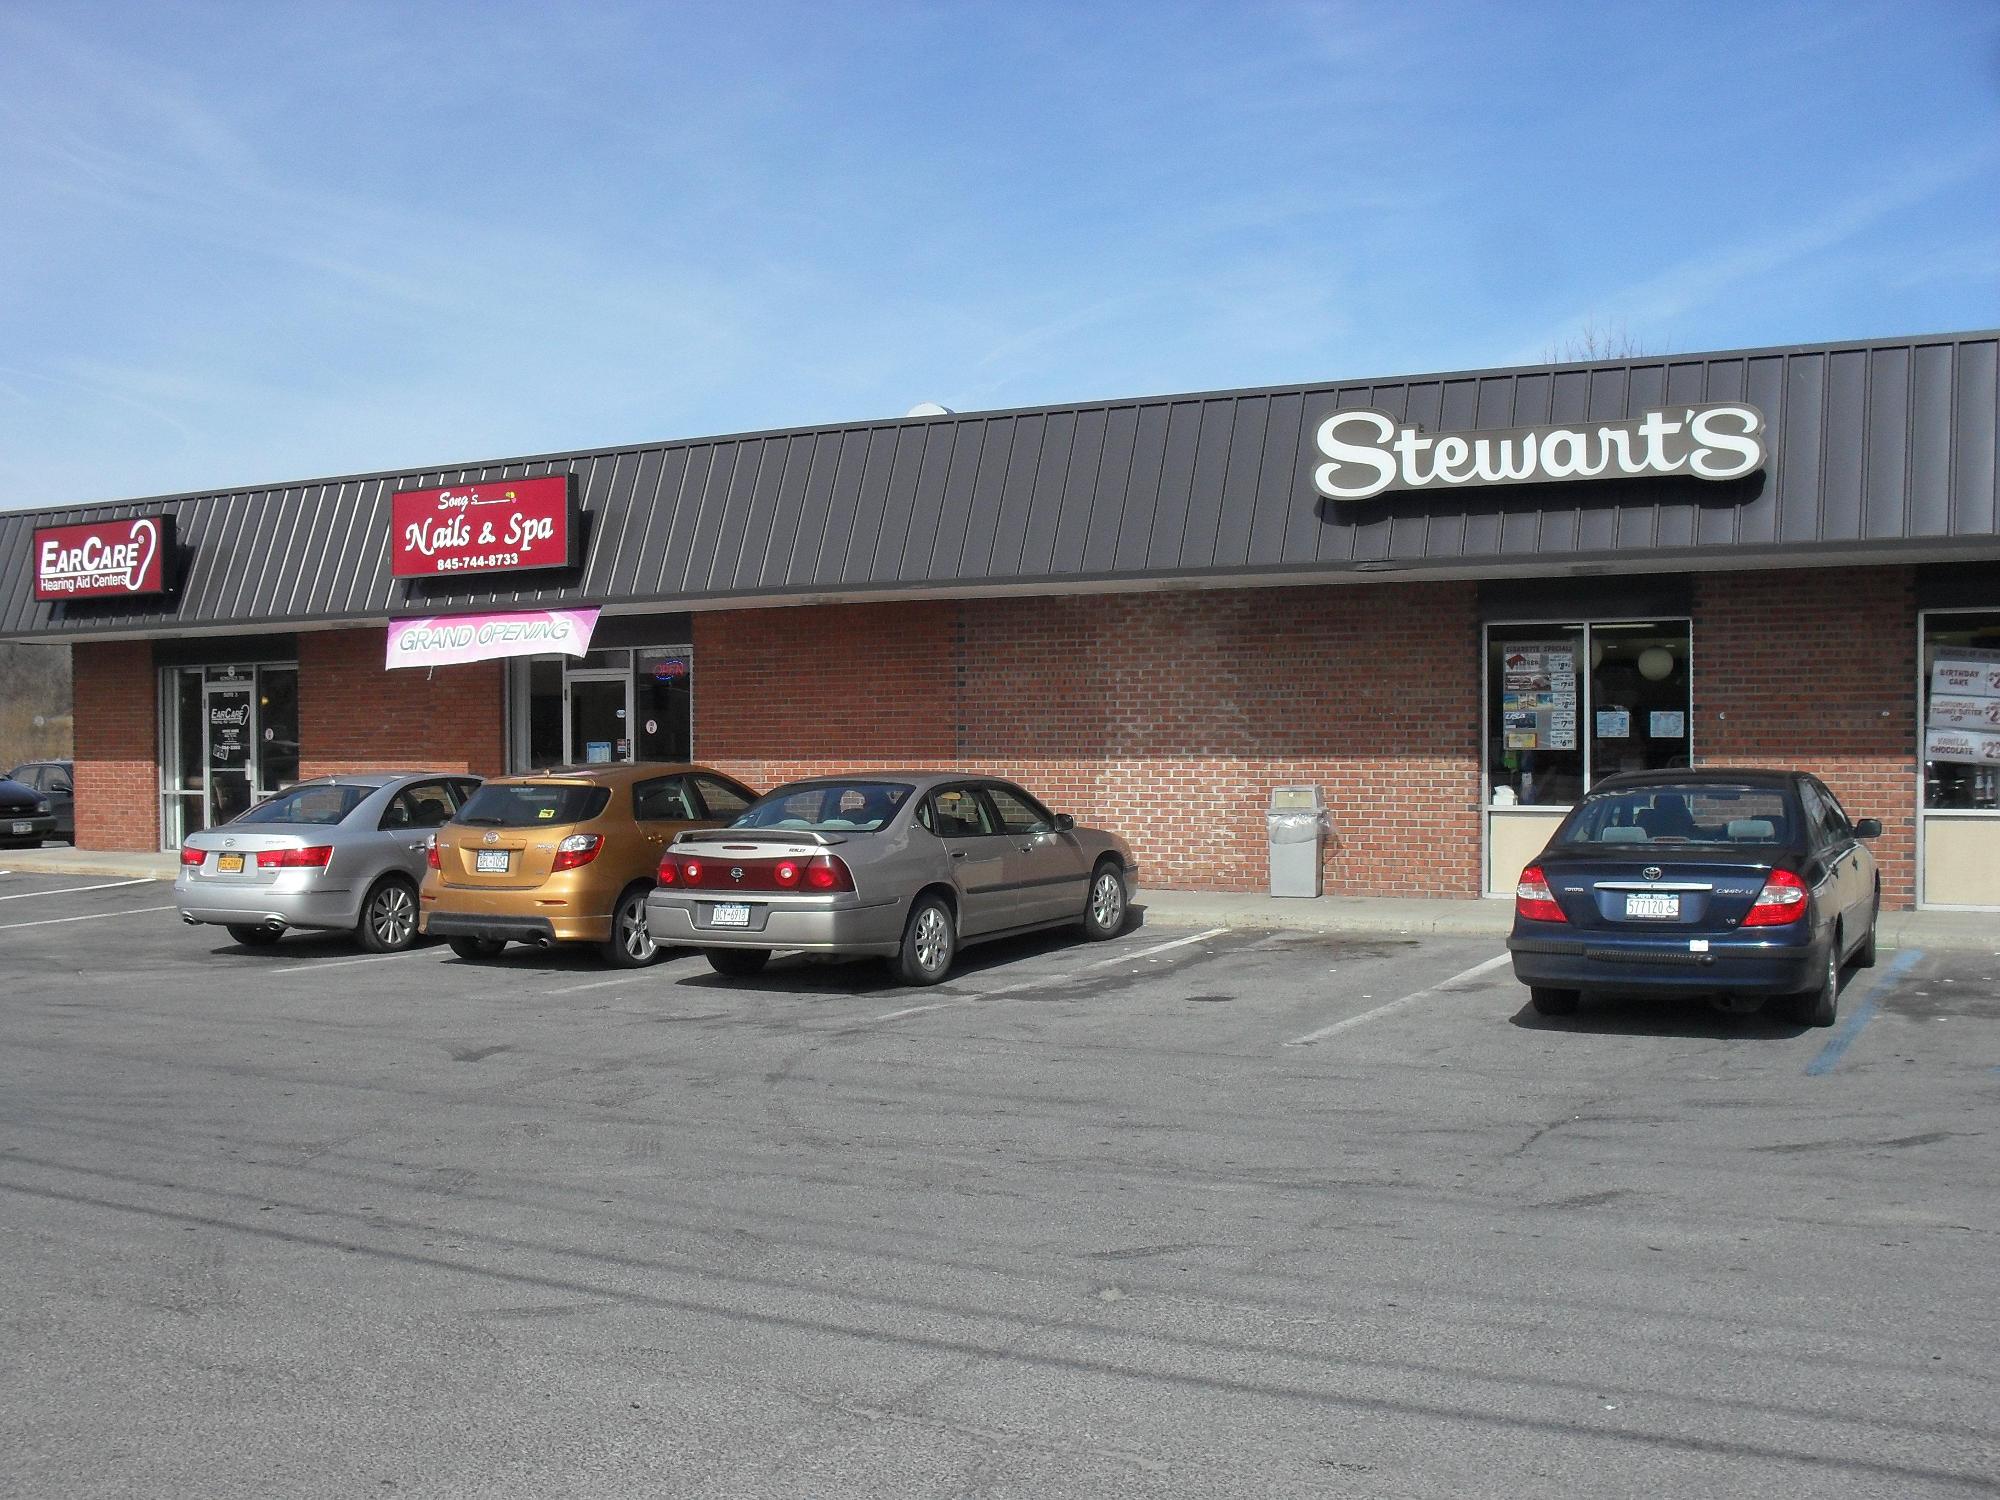 Stewart's Shops